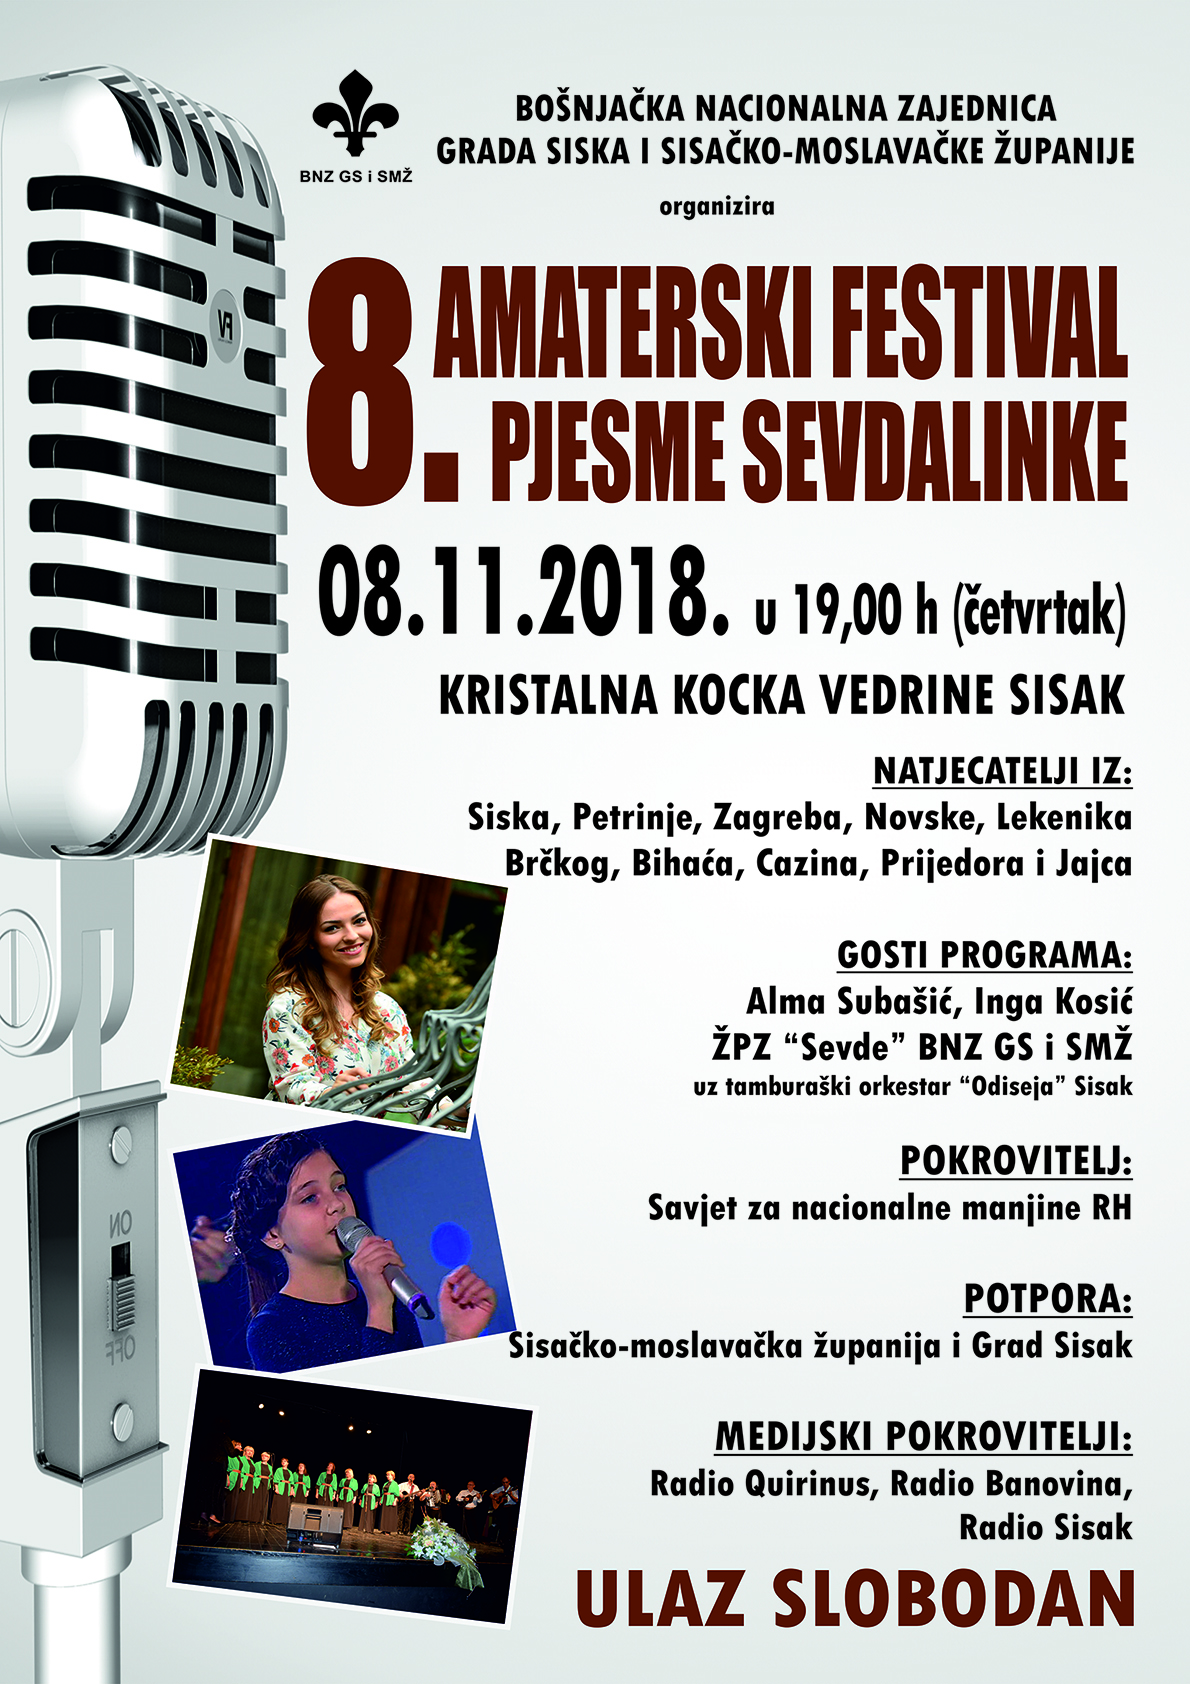 BNZ_plakat_A2___8._amaterski_festival_pjesme_sevdalinke